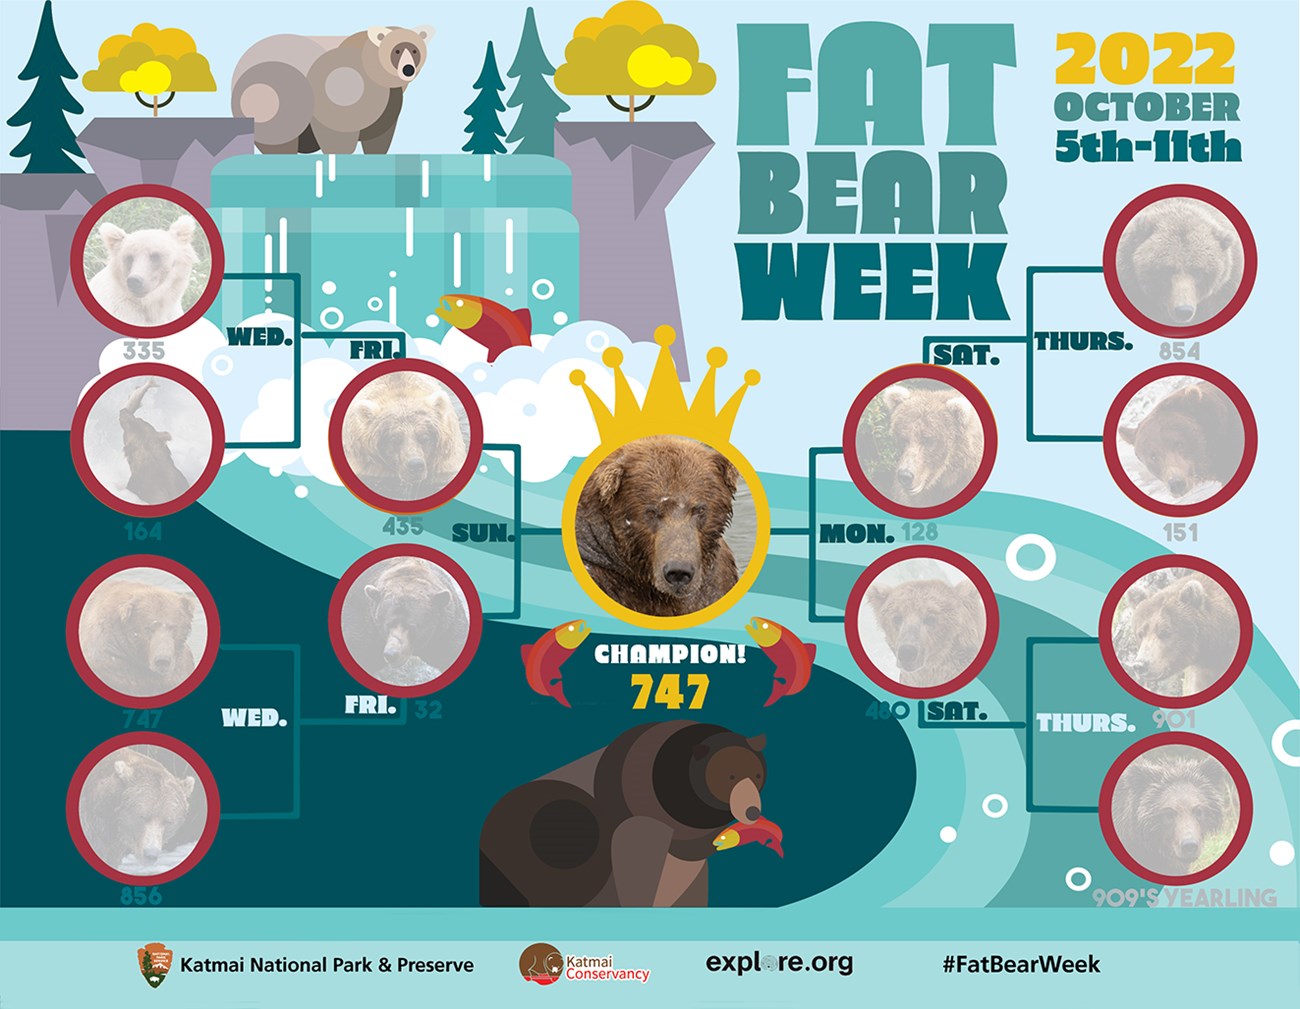 Fat Bear Week voting begins, in a race to find the chonkiest bear